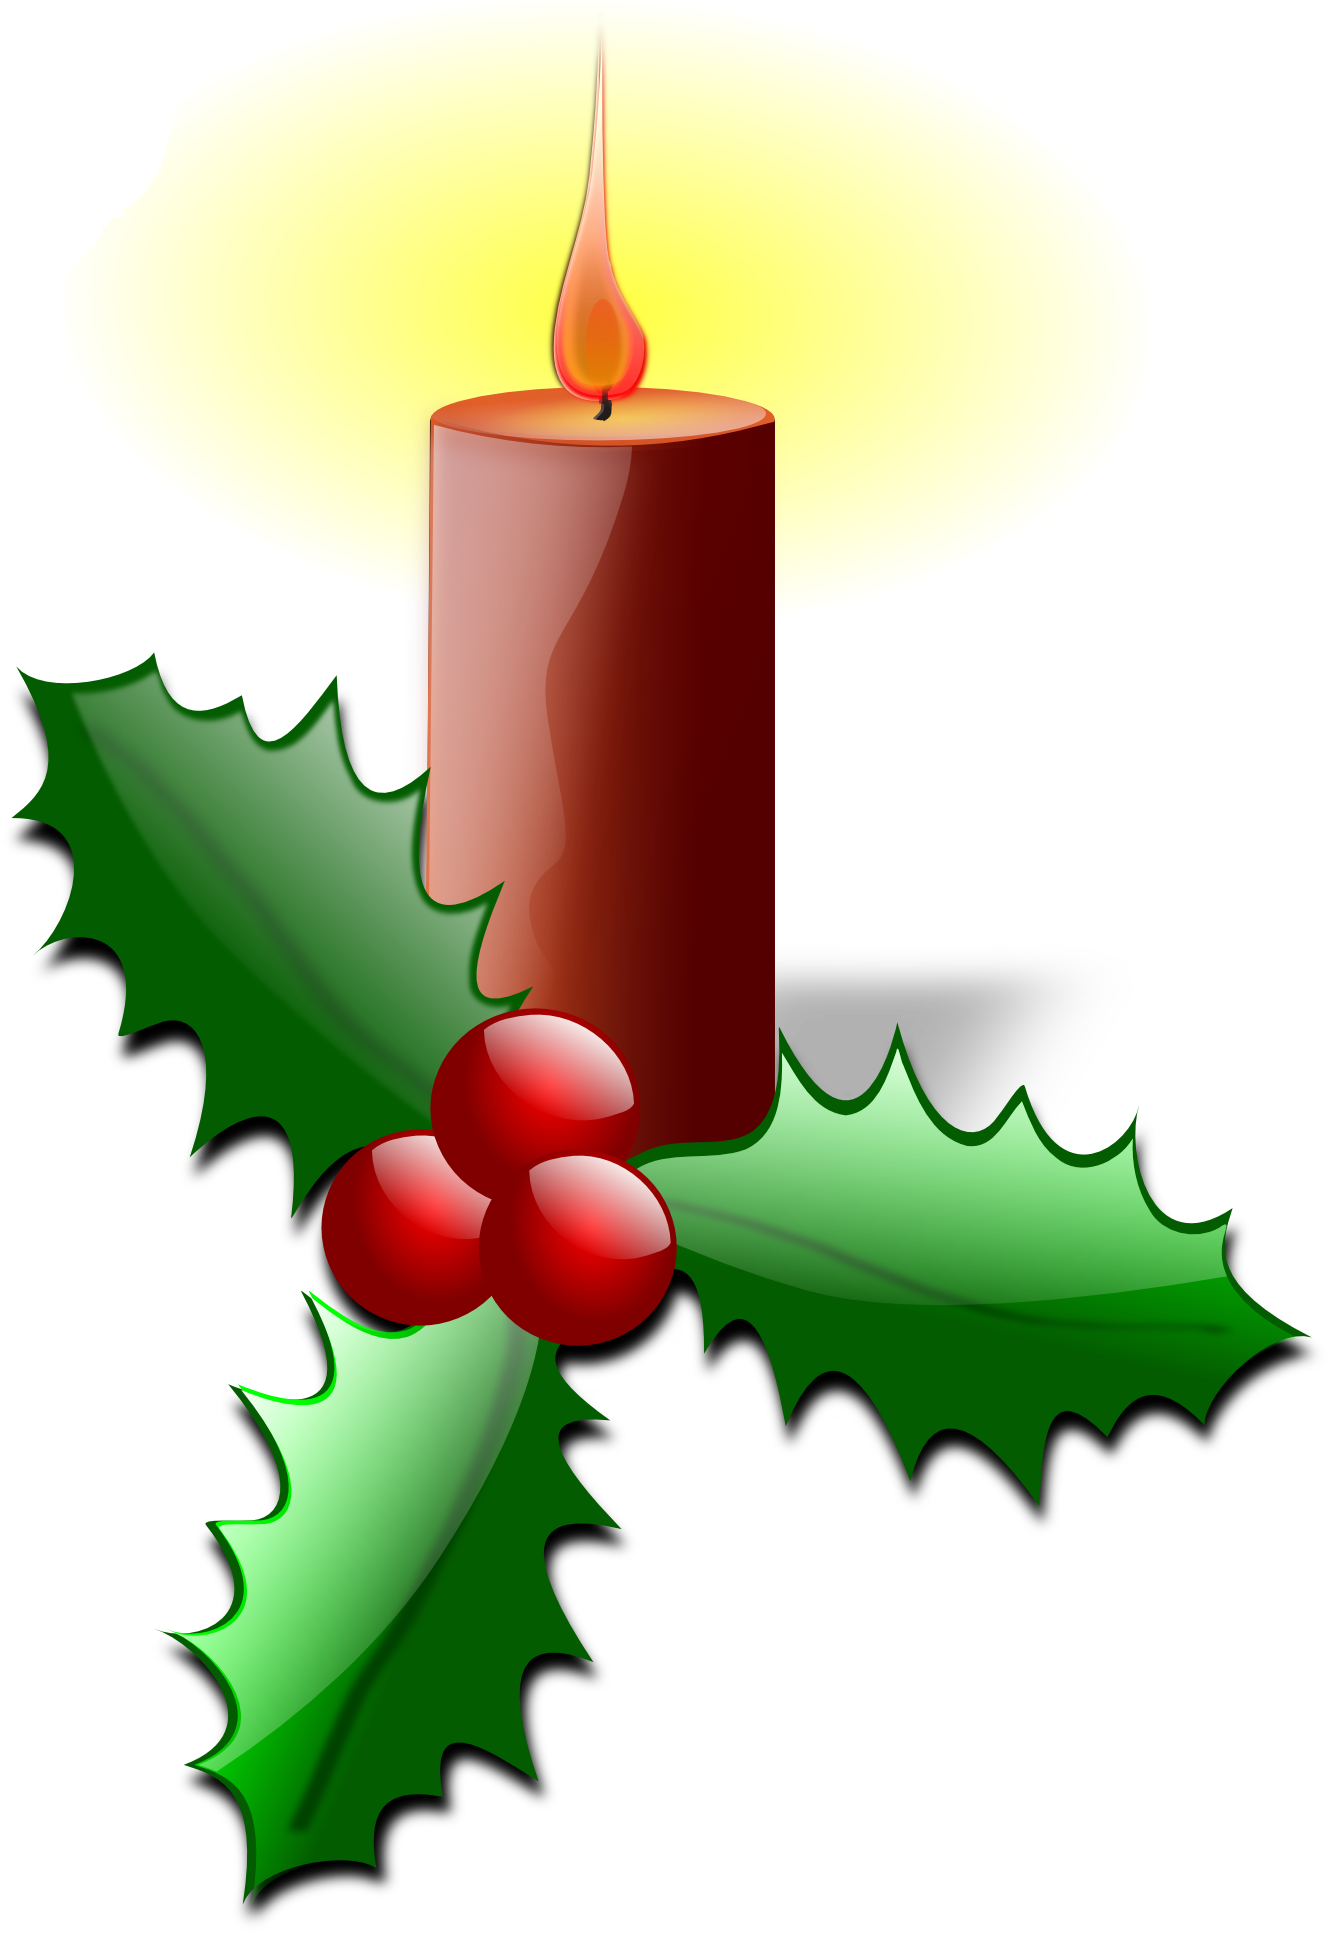 Xmas Stuff For > Christmas Holly Bells Clip Art